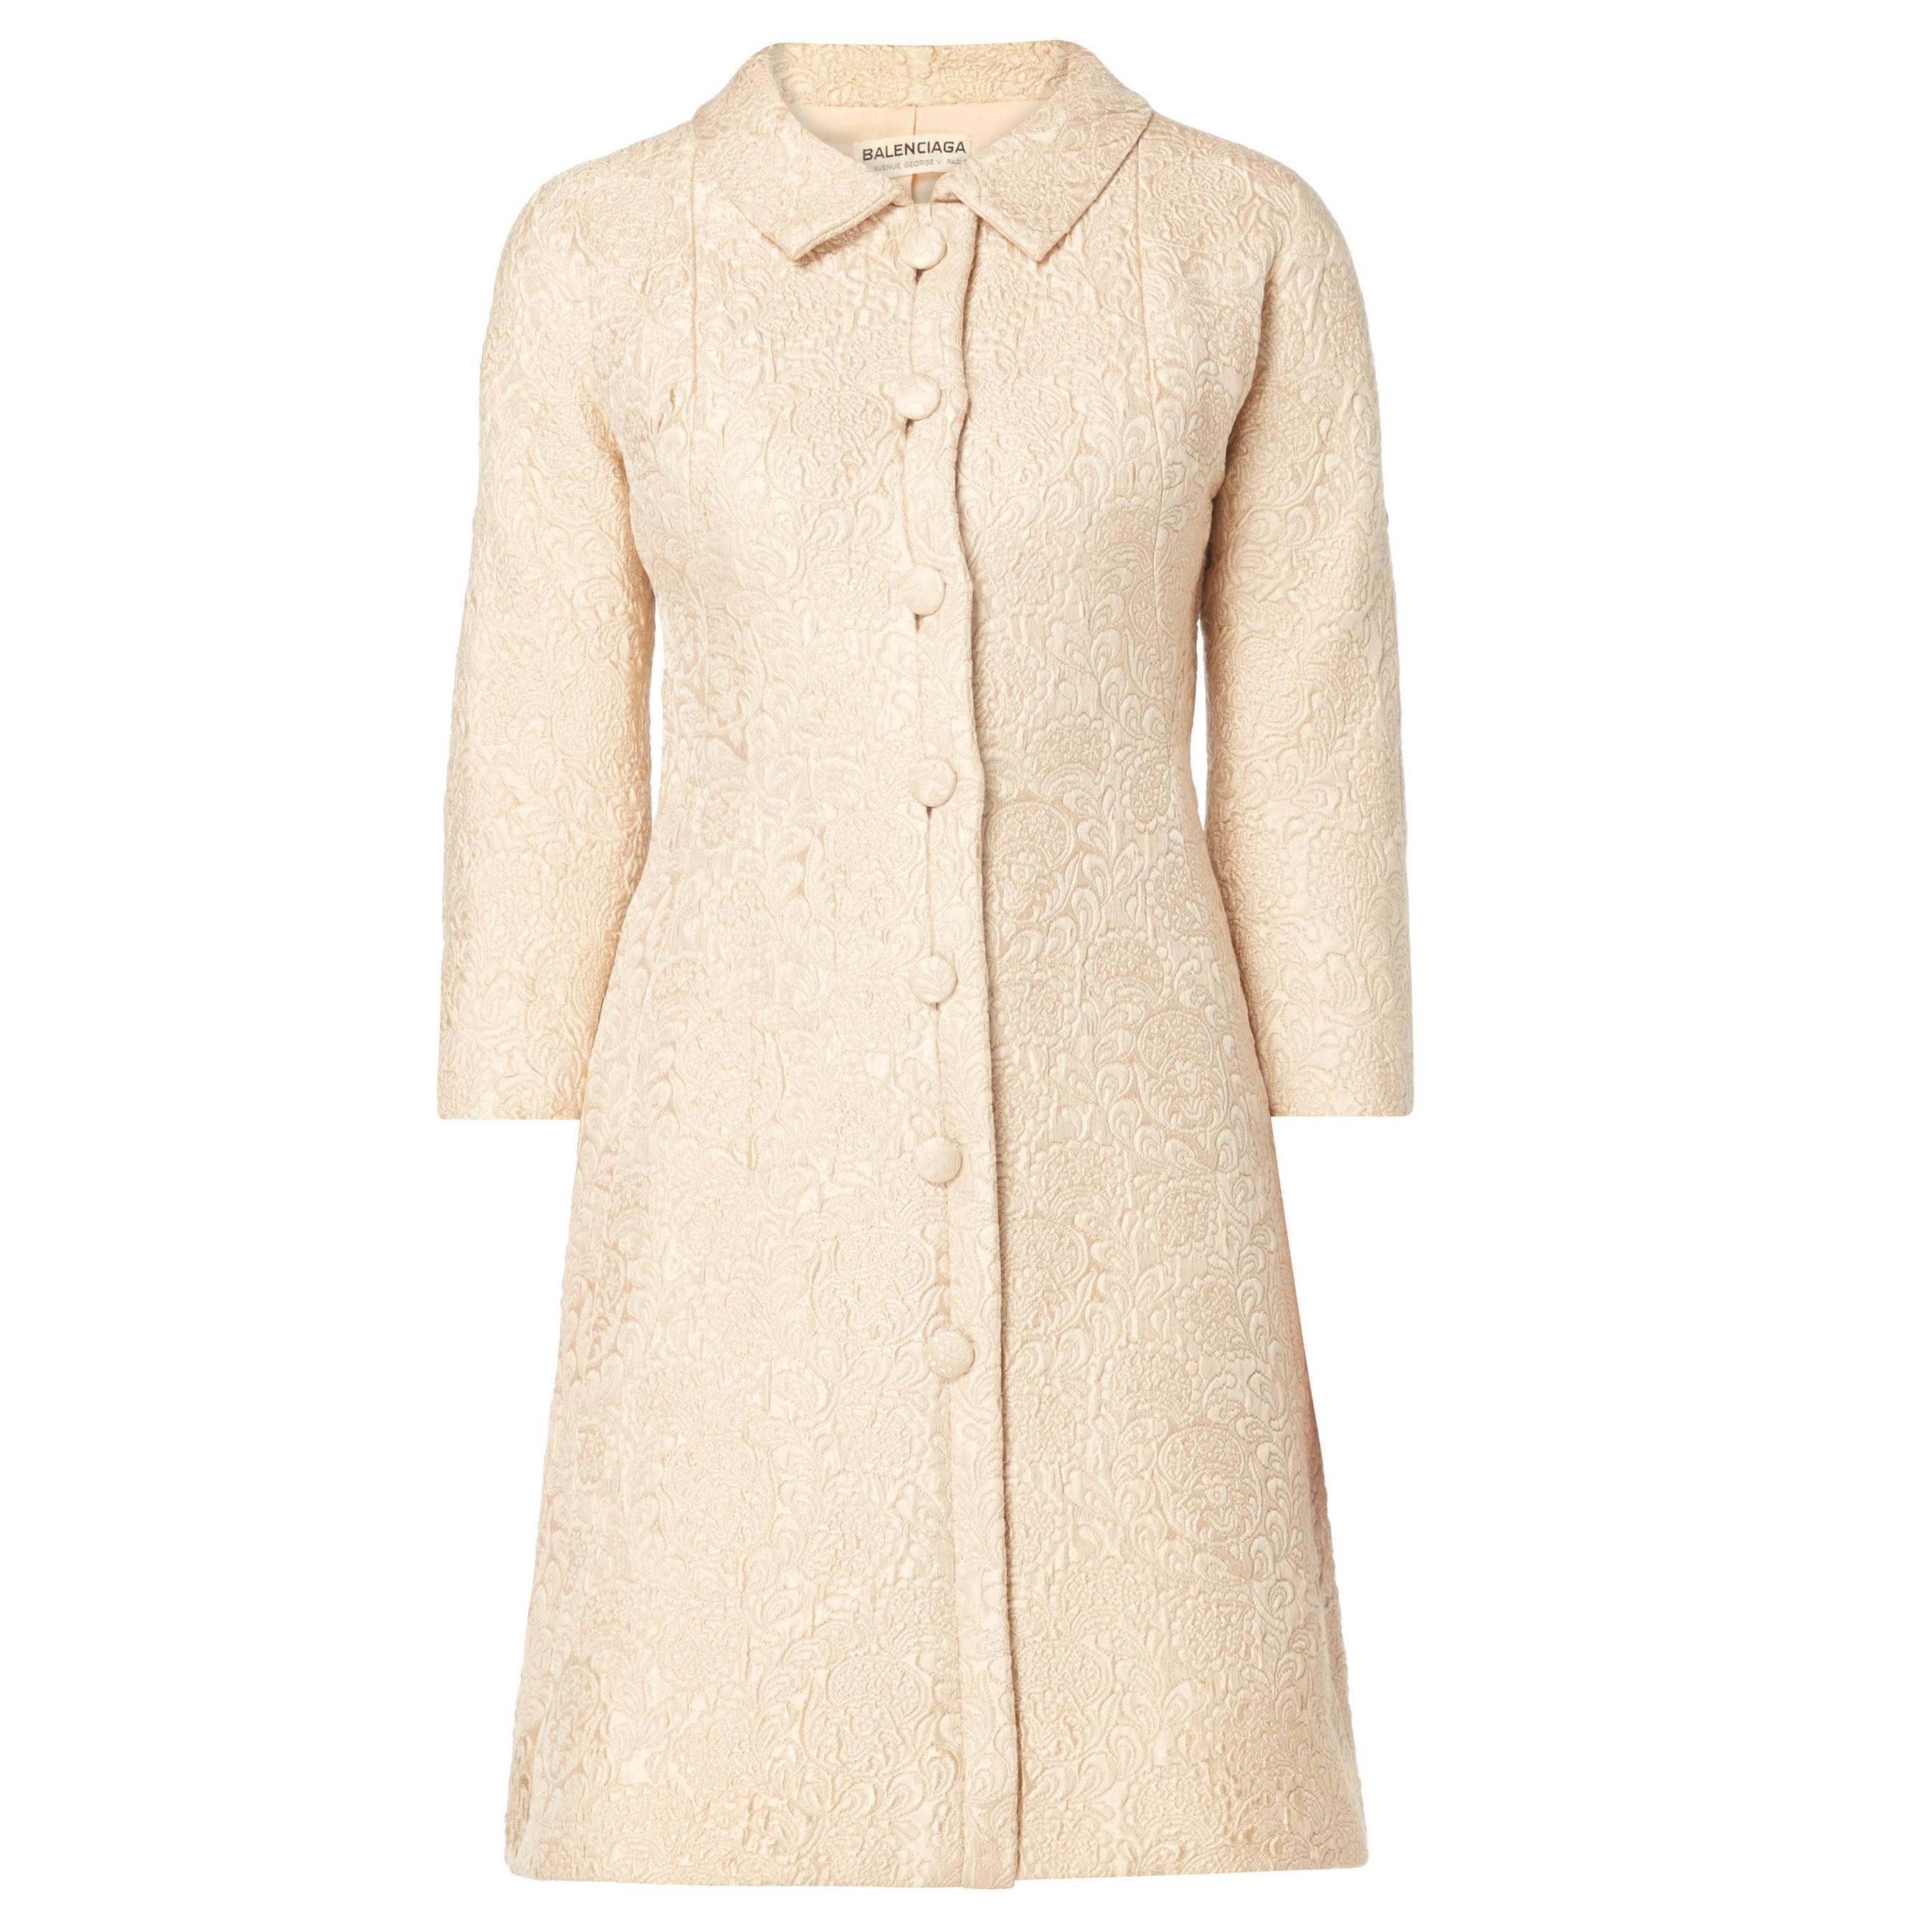 Balenciaga haute couture beige coat dress, Spring/Summer 1964